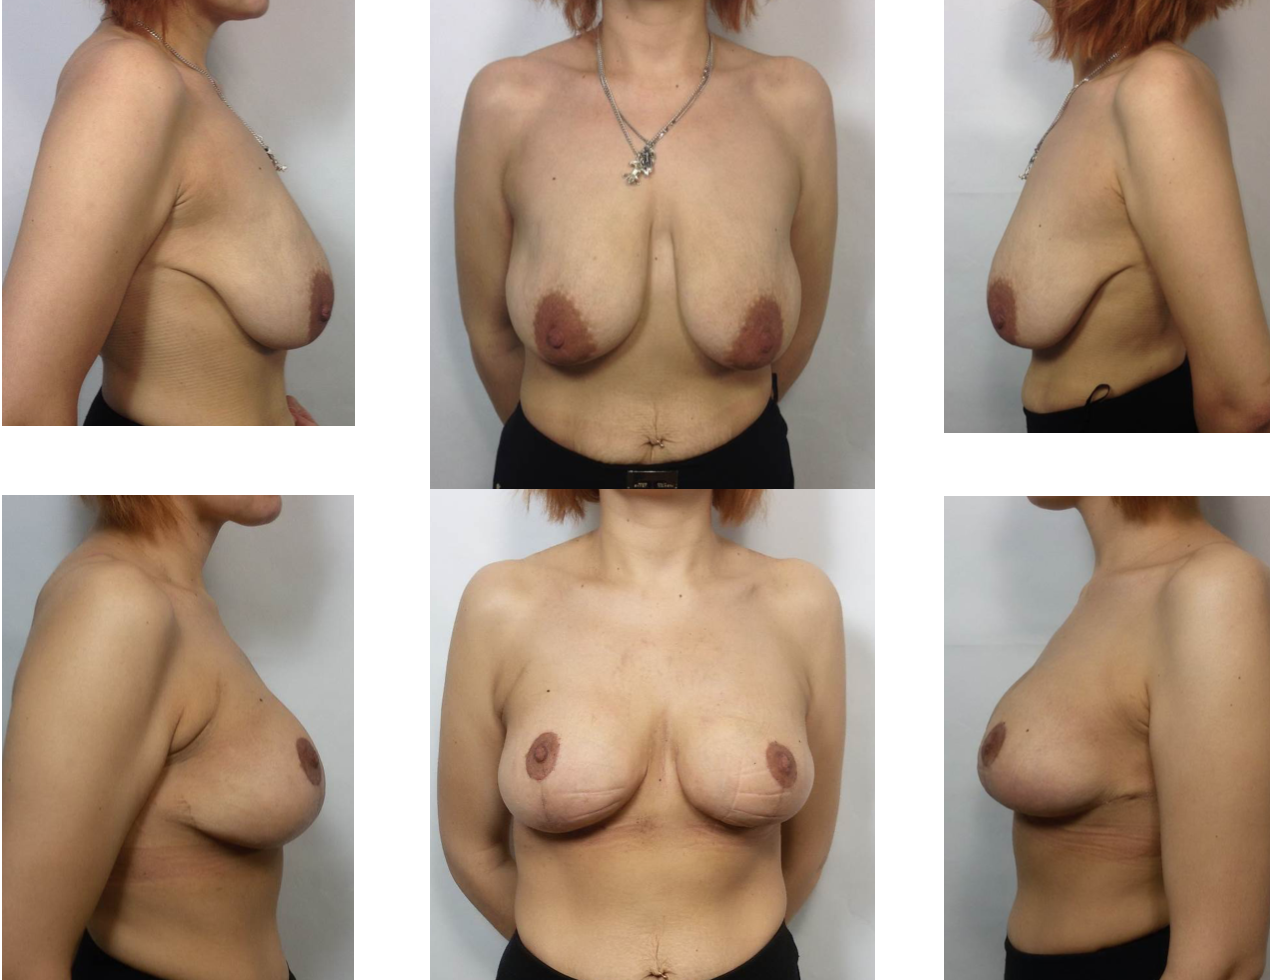 виды форм груди женщин фото 99